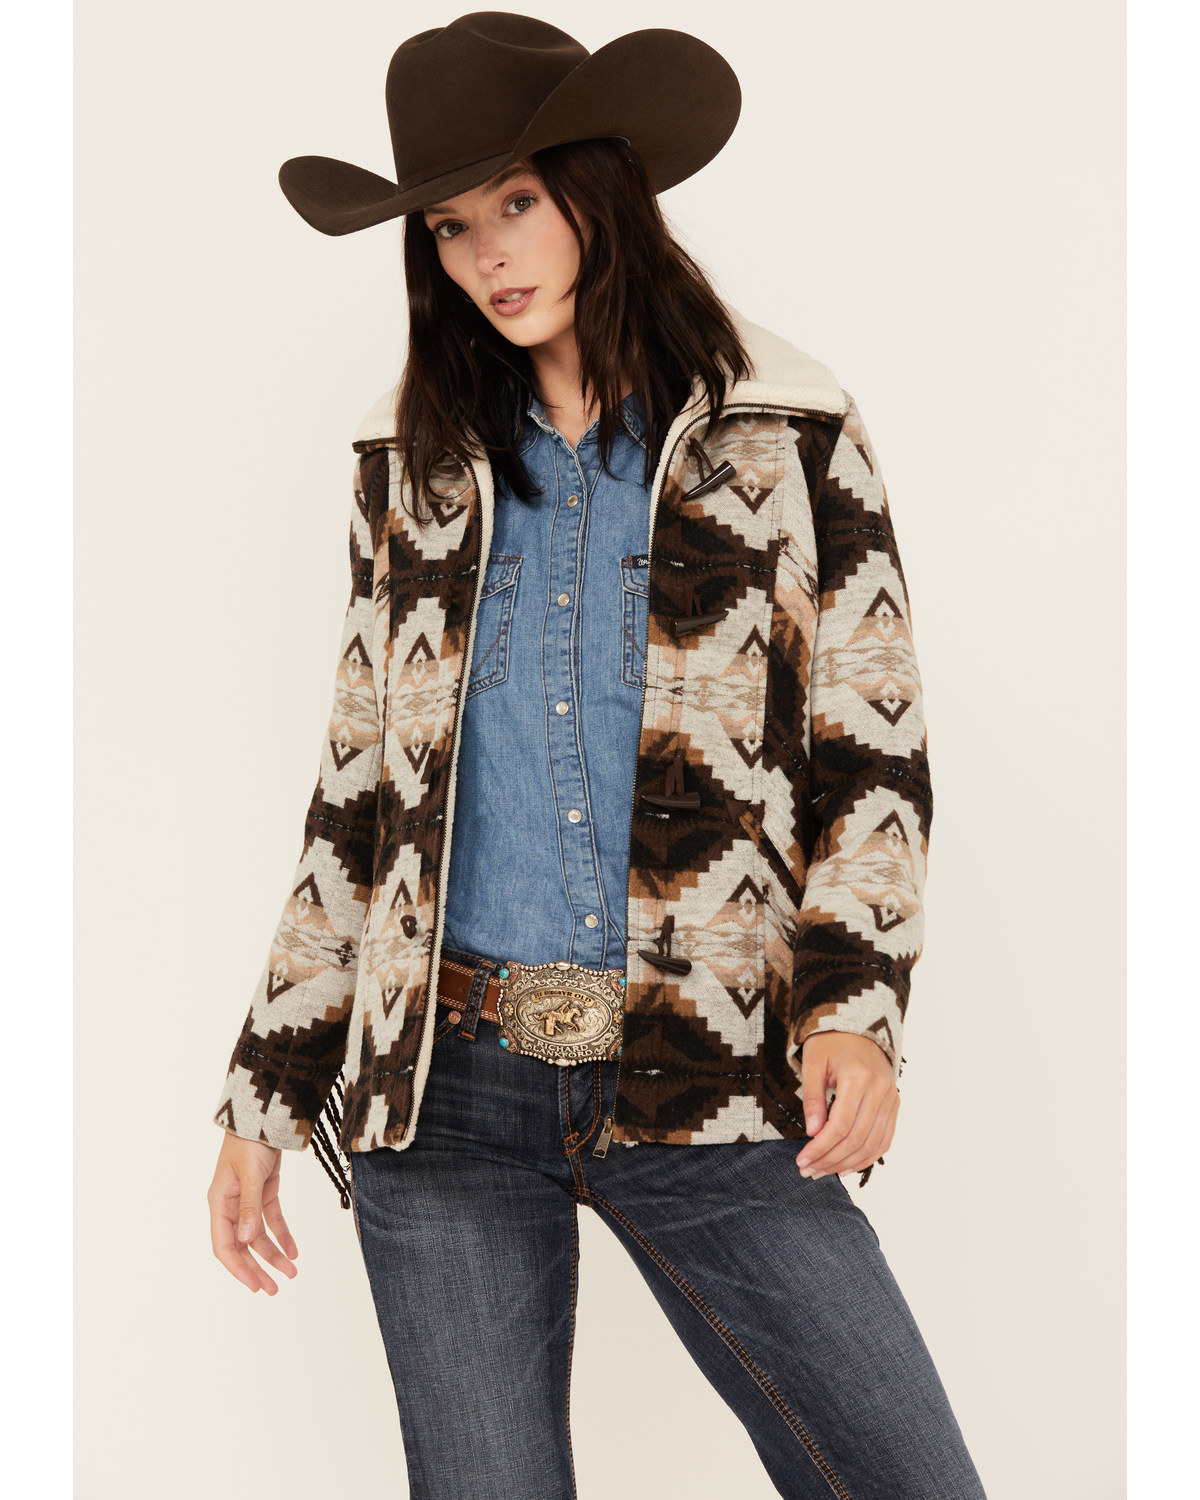 Powder River Outfitters Women's Southwestern Jacquard Fringe Coat